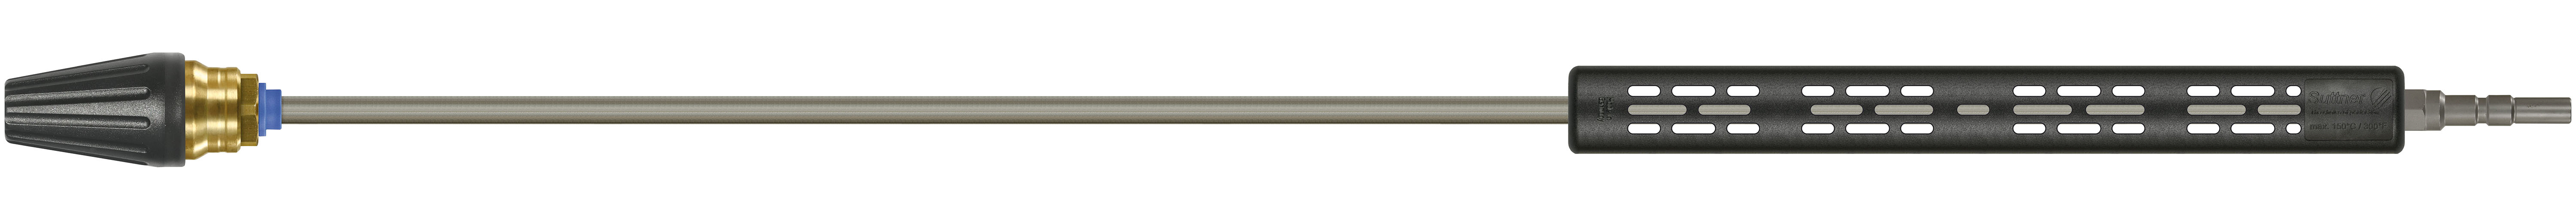 Rotabuse céramique avec lance 1000mm, 200-400 bar, Calibre 055